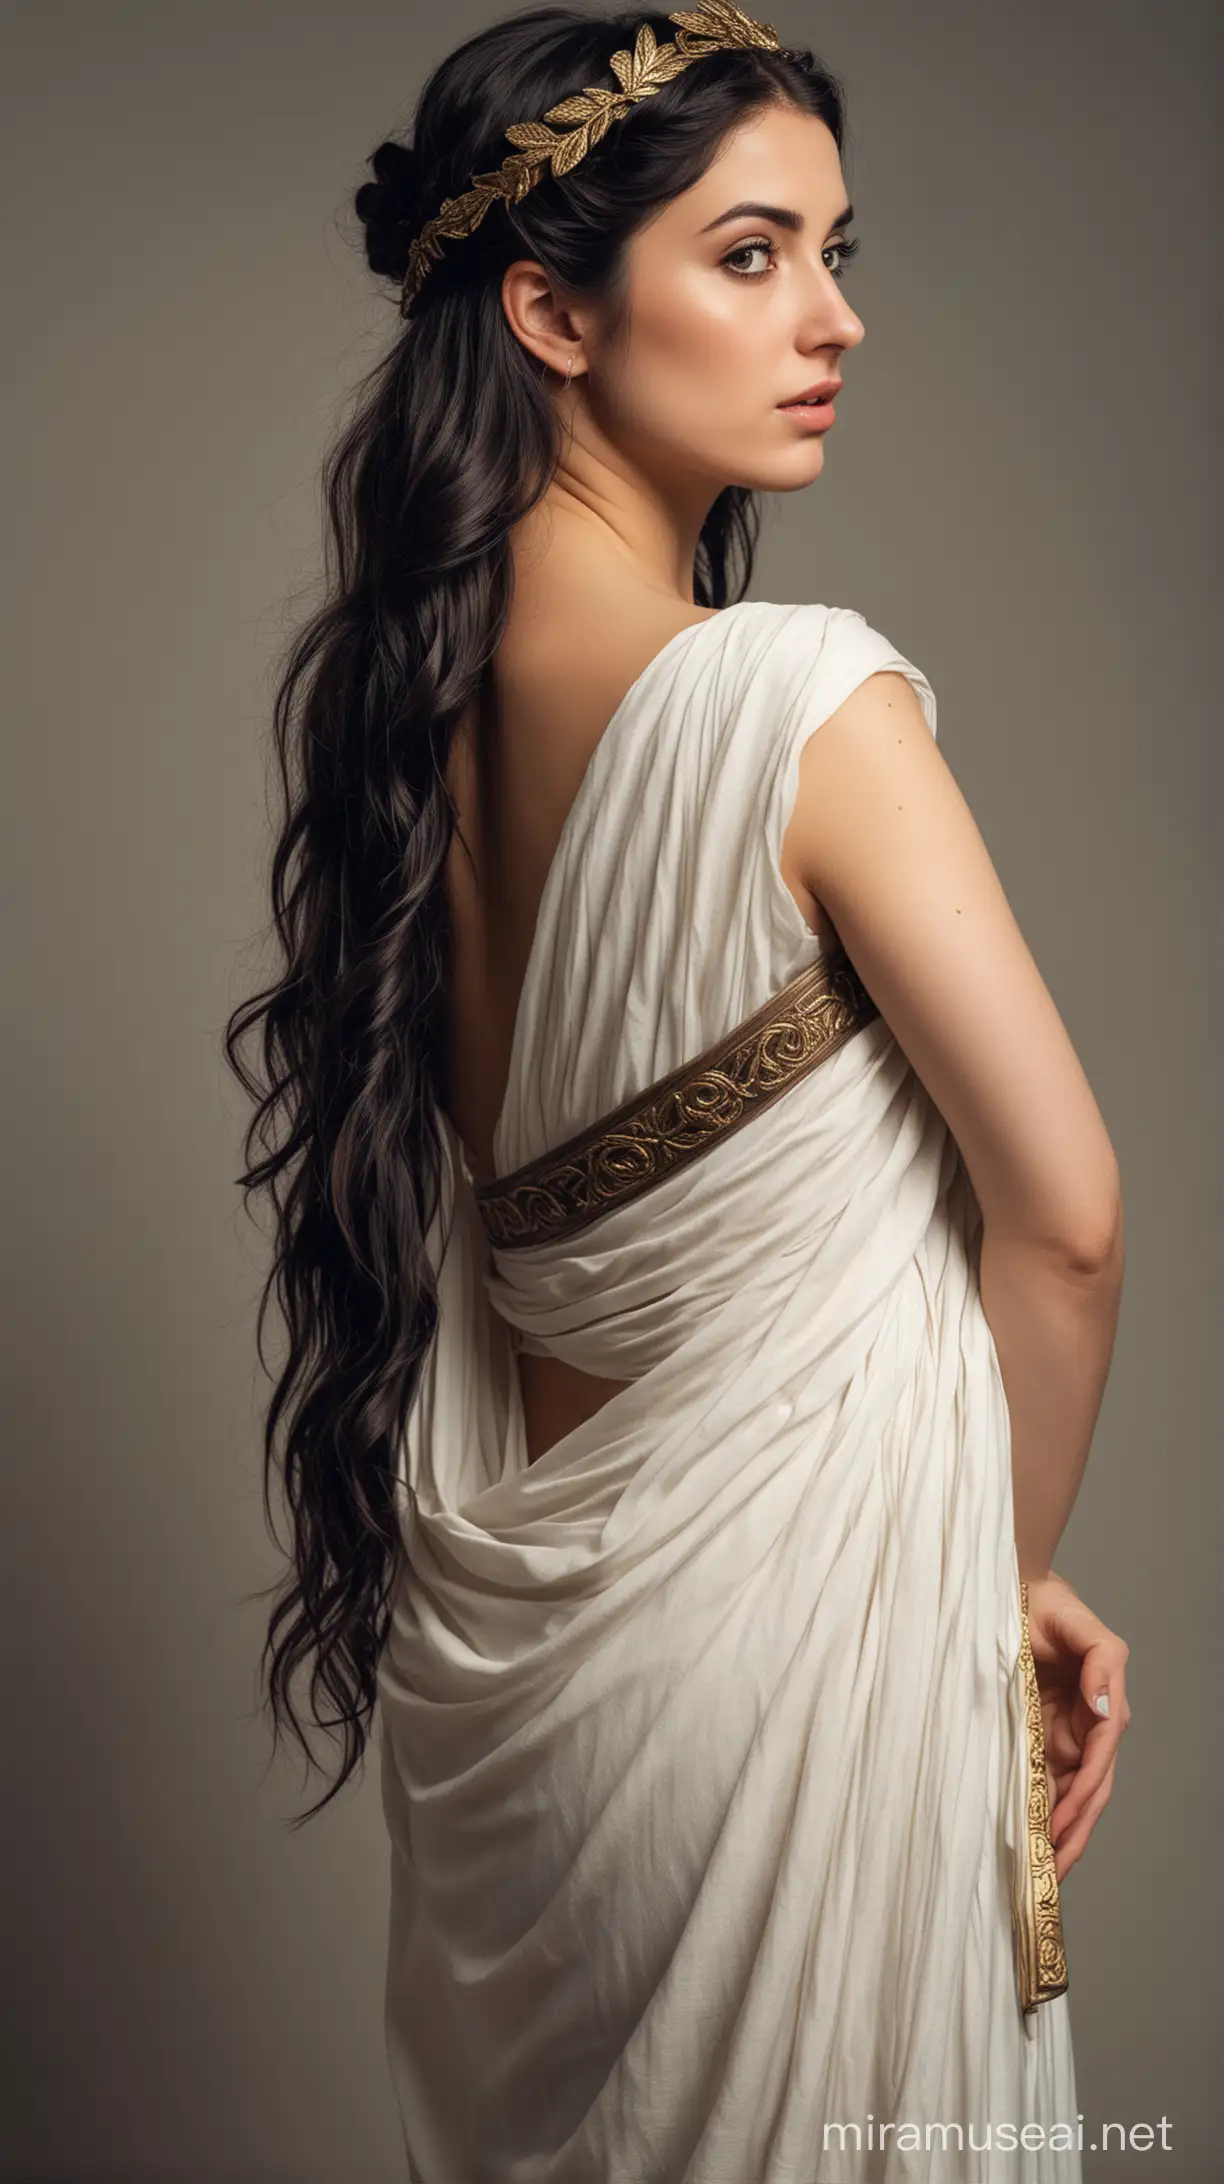 mujer cabello oscur semblante de despecho, vestimenta griega antigua